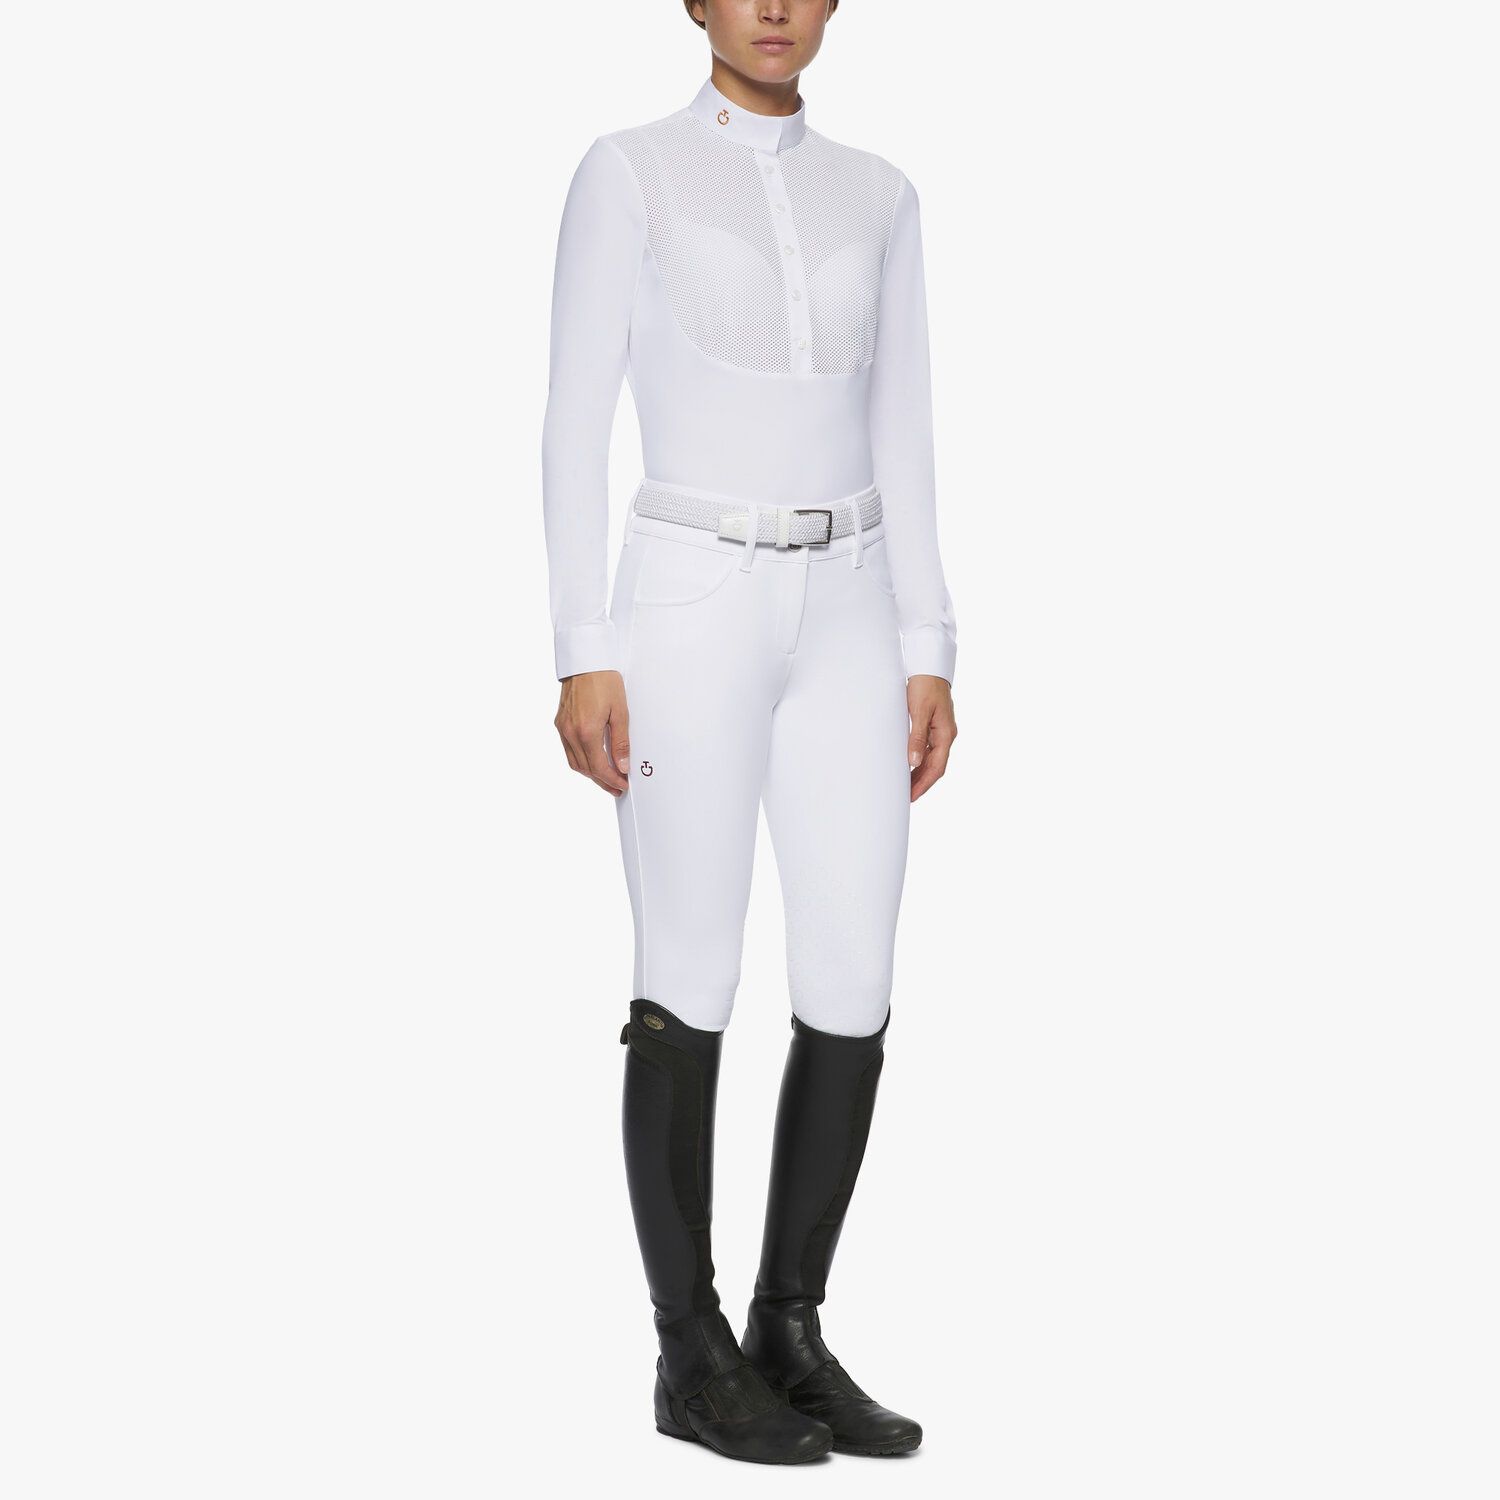 CAVALLERIA TOSCANA Damen Turniershirt Langarm Jersey Mesh BIB - white - XL - 2